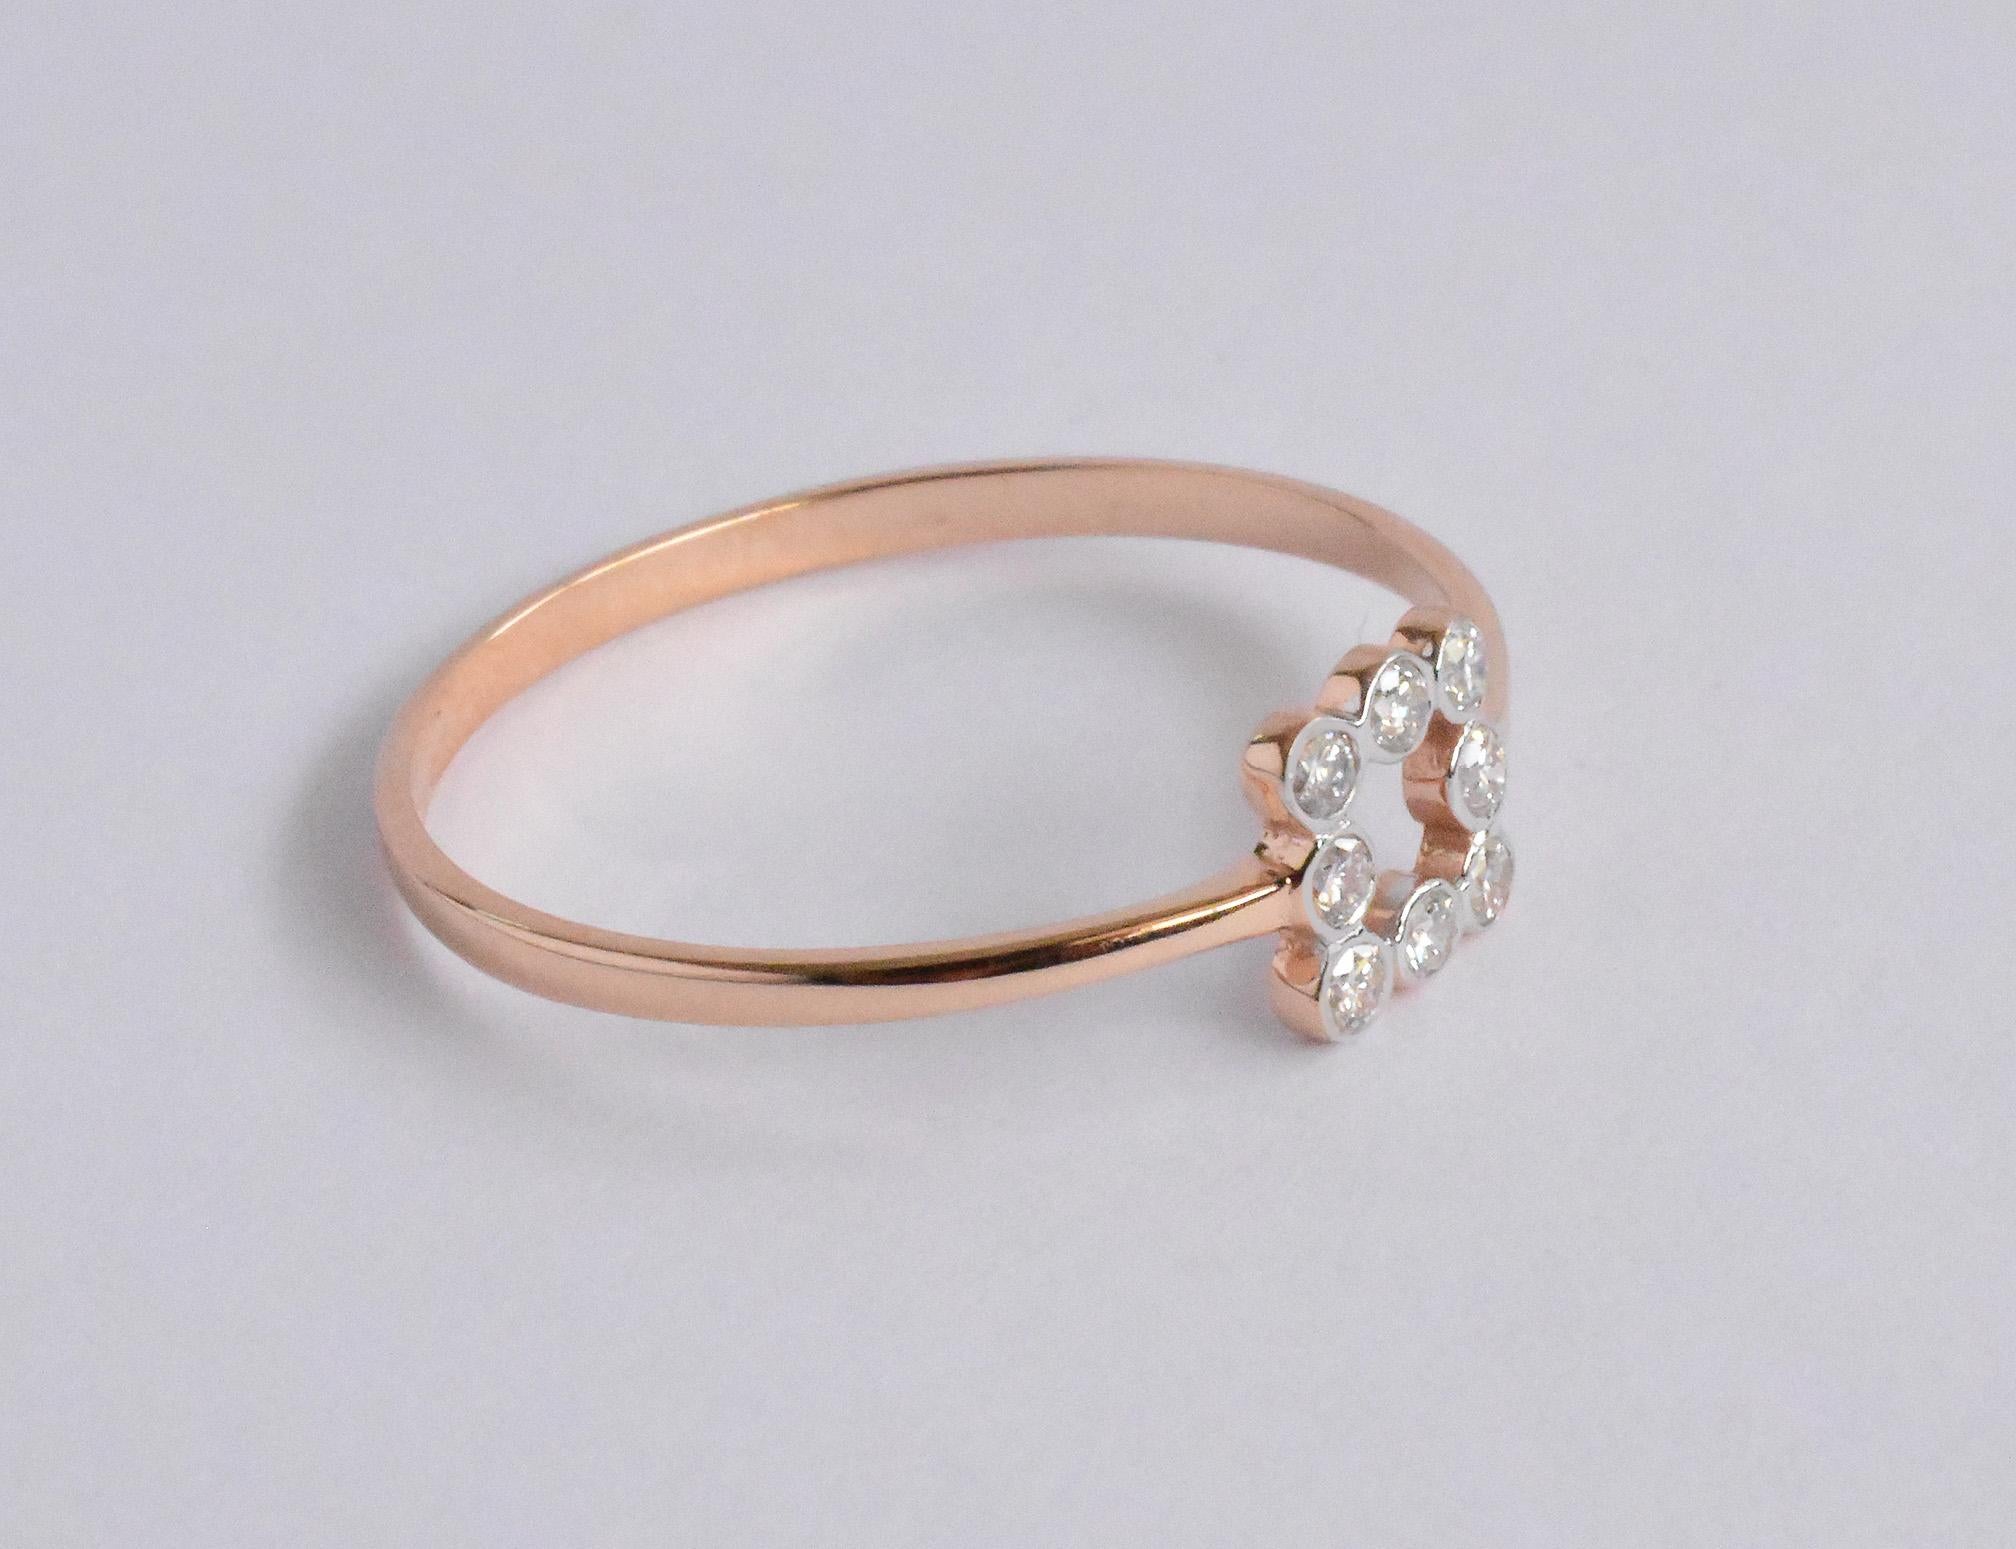 For Sale:  14k Gold Diamond Ring Bezel Set Diamond Band Ring Square Ring 8